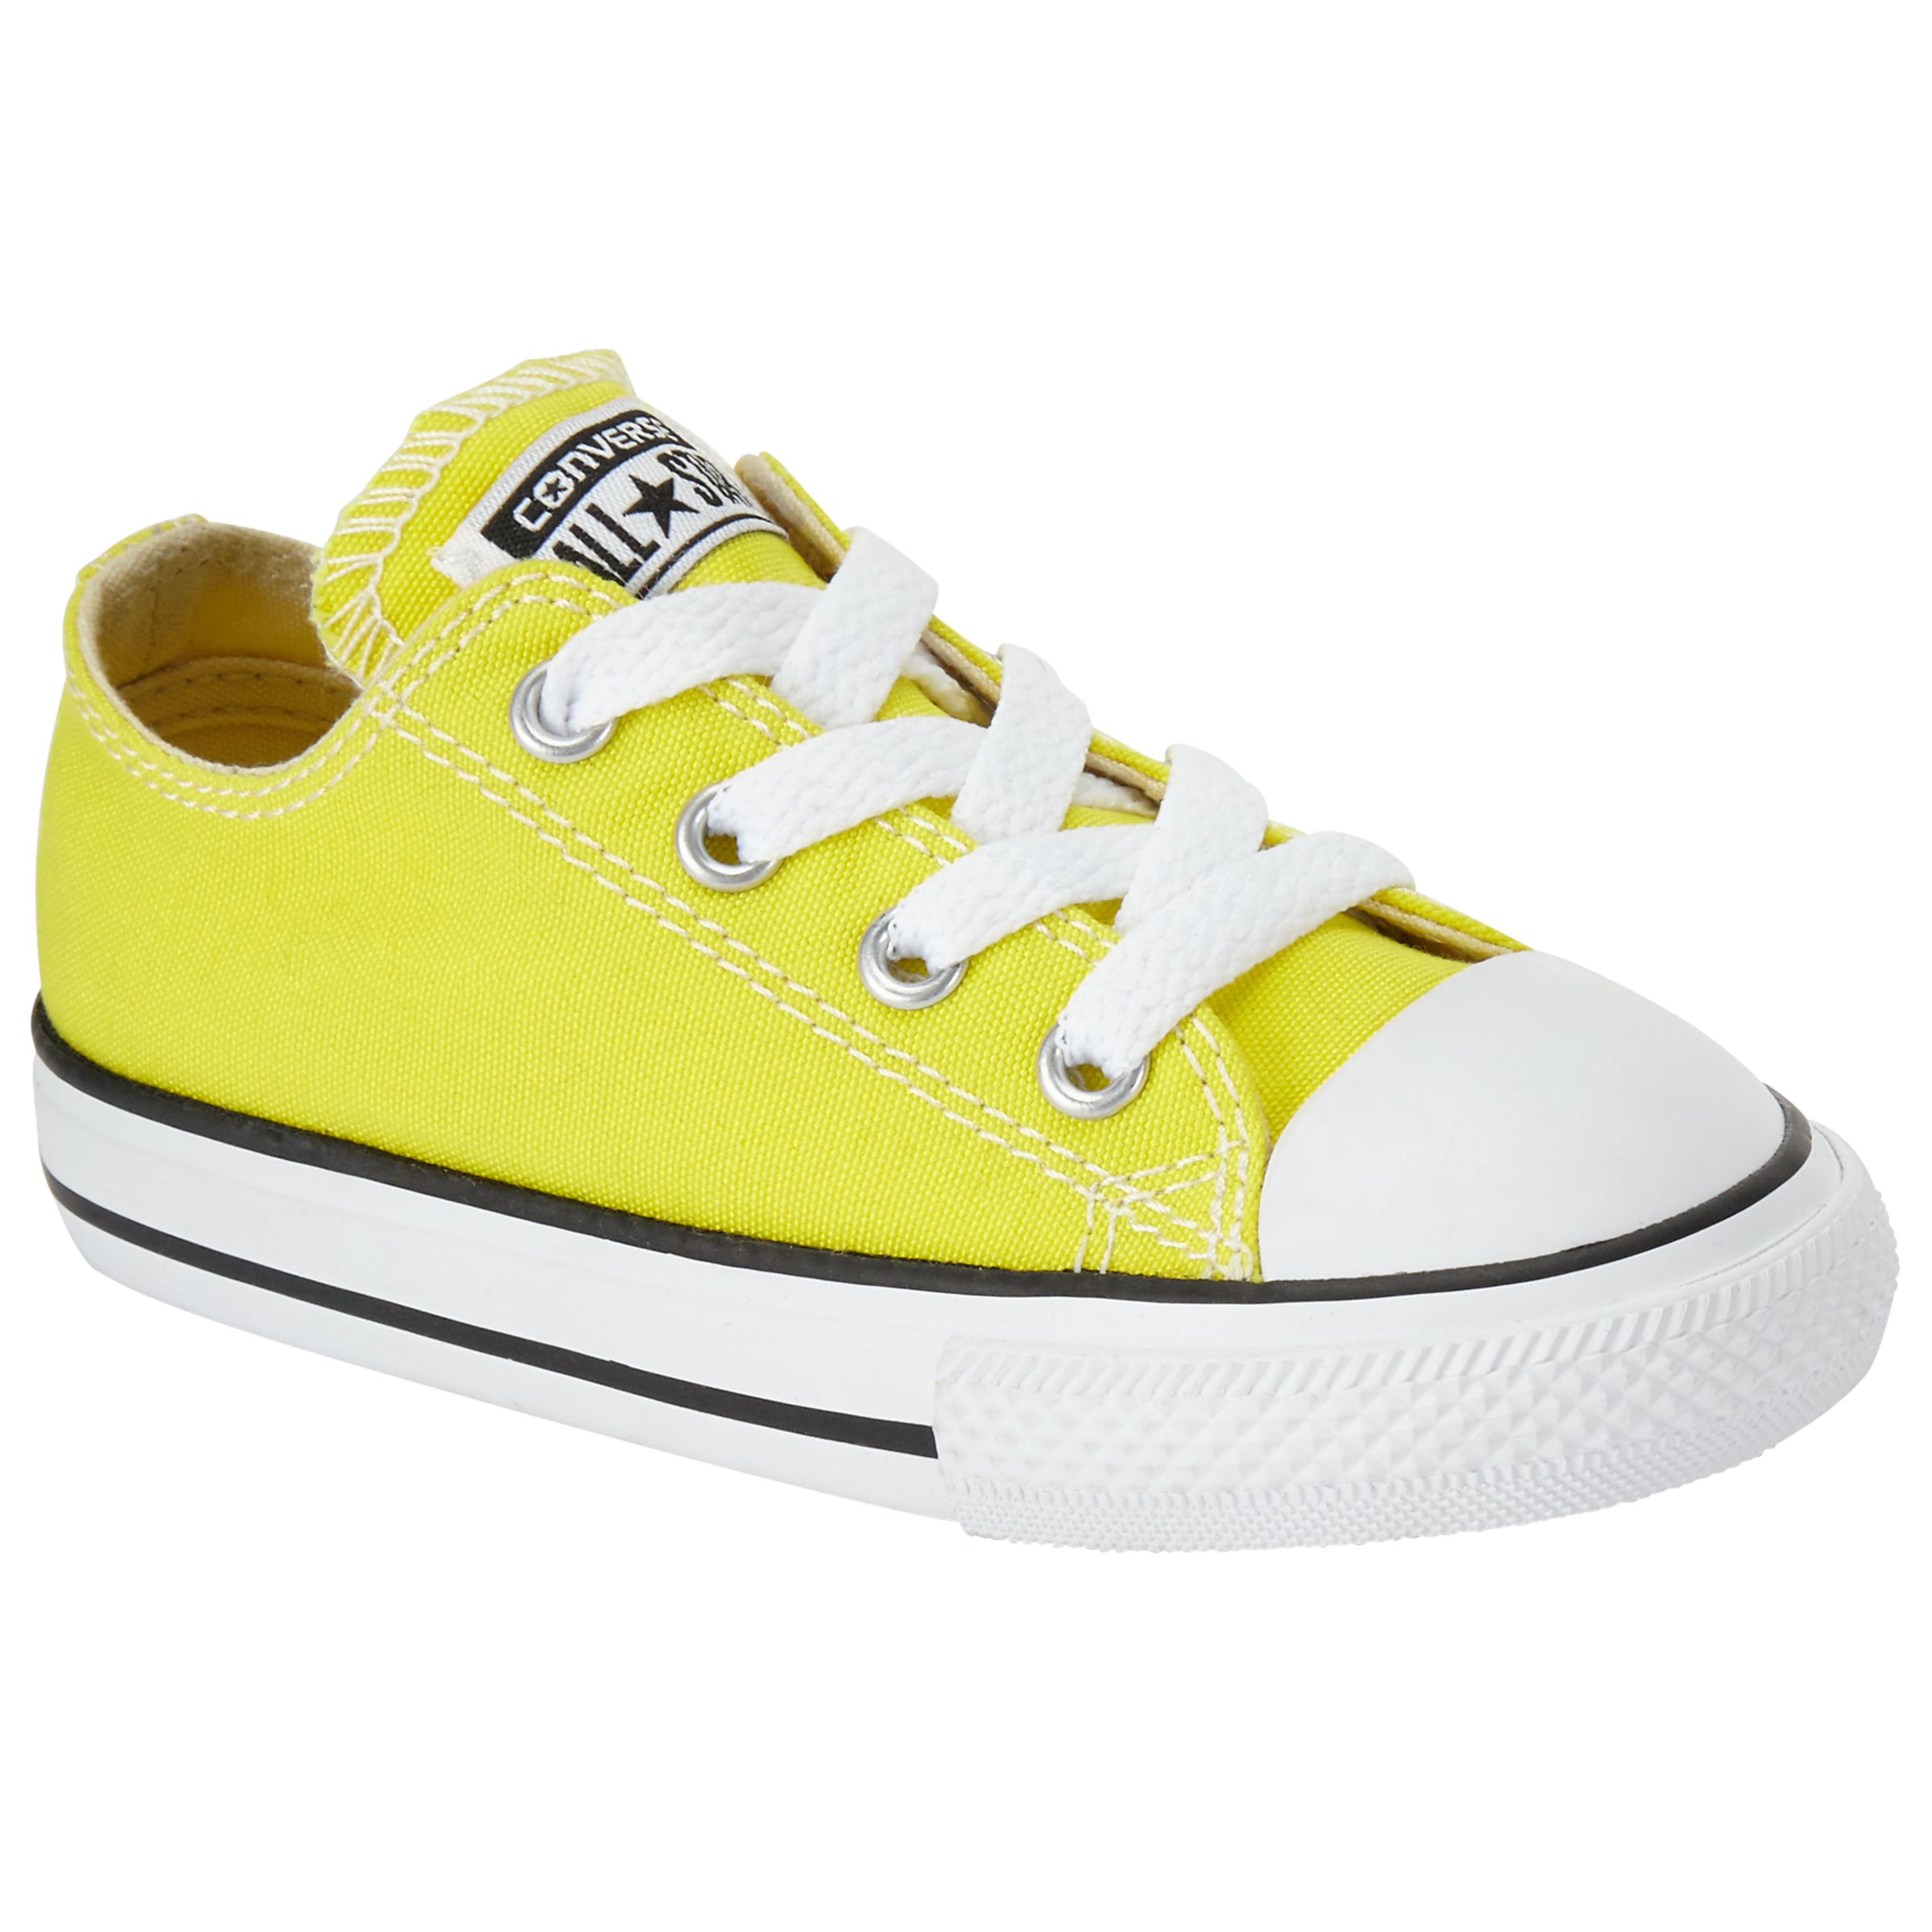 yellow converse baby